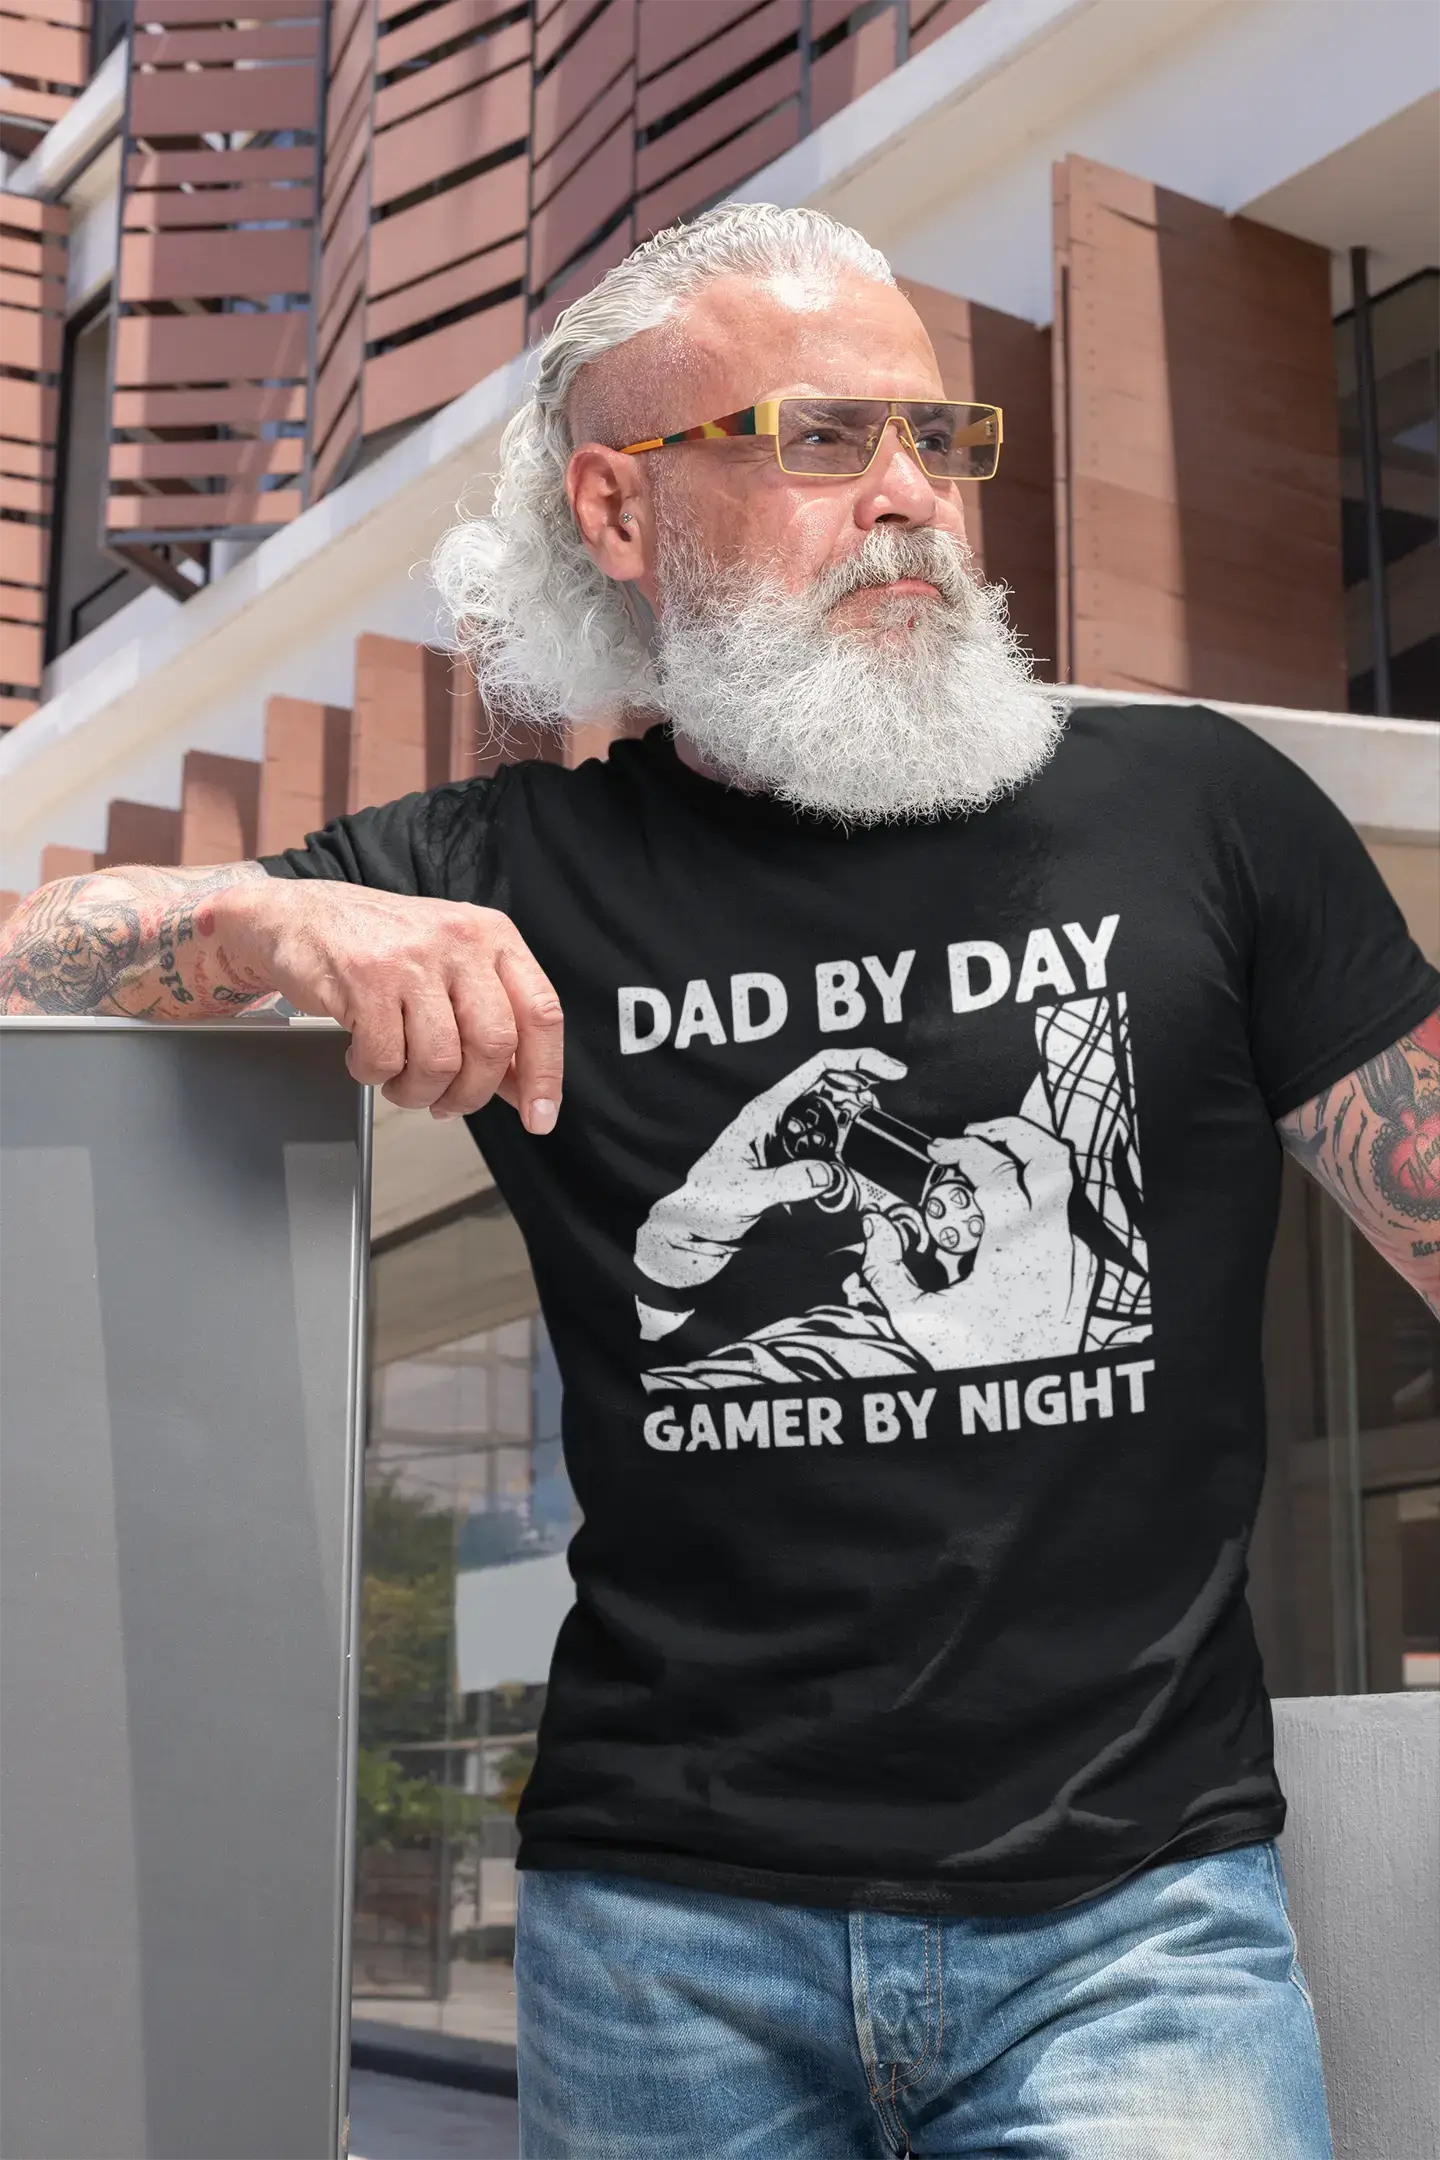 ULTRABASIC Men's T-Shirt Dad By Dad Gamer By Night - Dad's Gaming T-Shirt